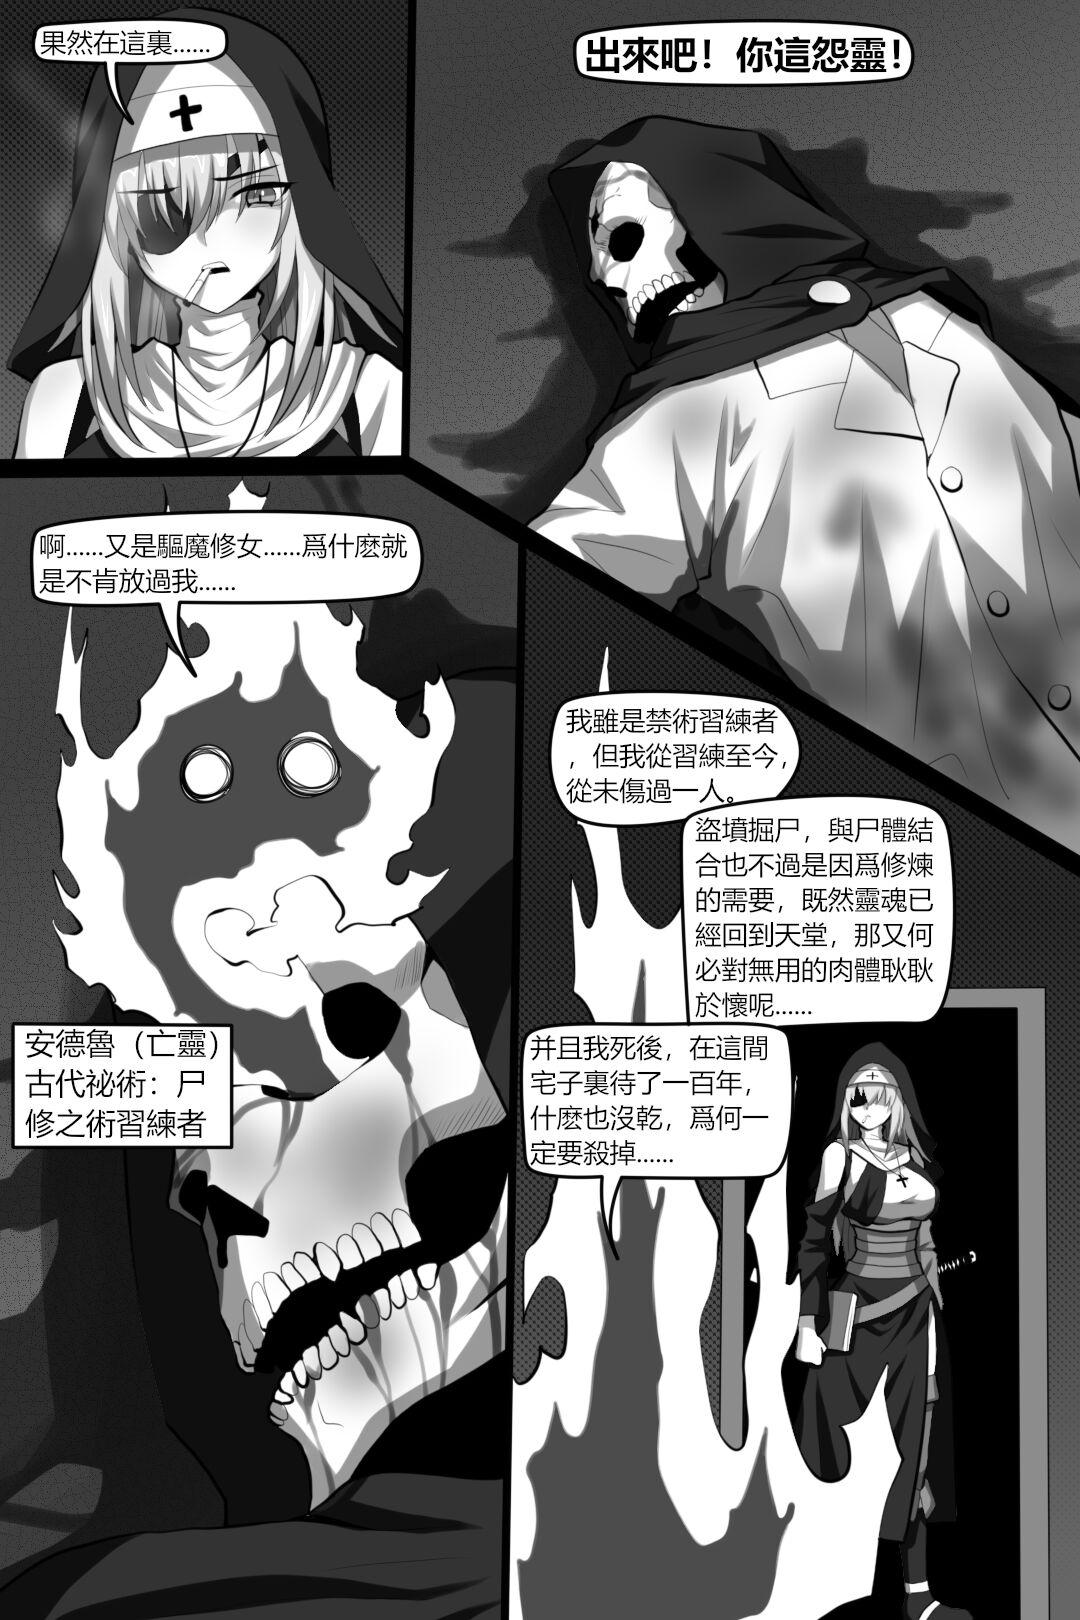 Fucking Bin Lian City Stories Ch2: Exorcist Nun. - Original Chibola - Page 6